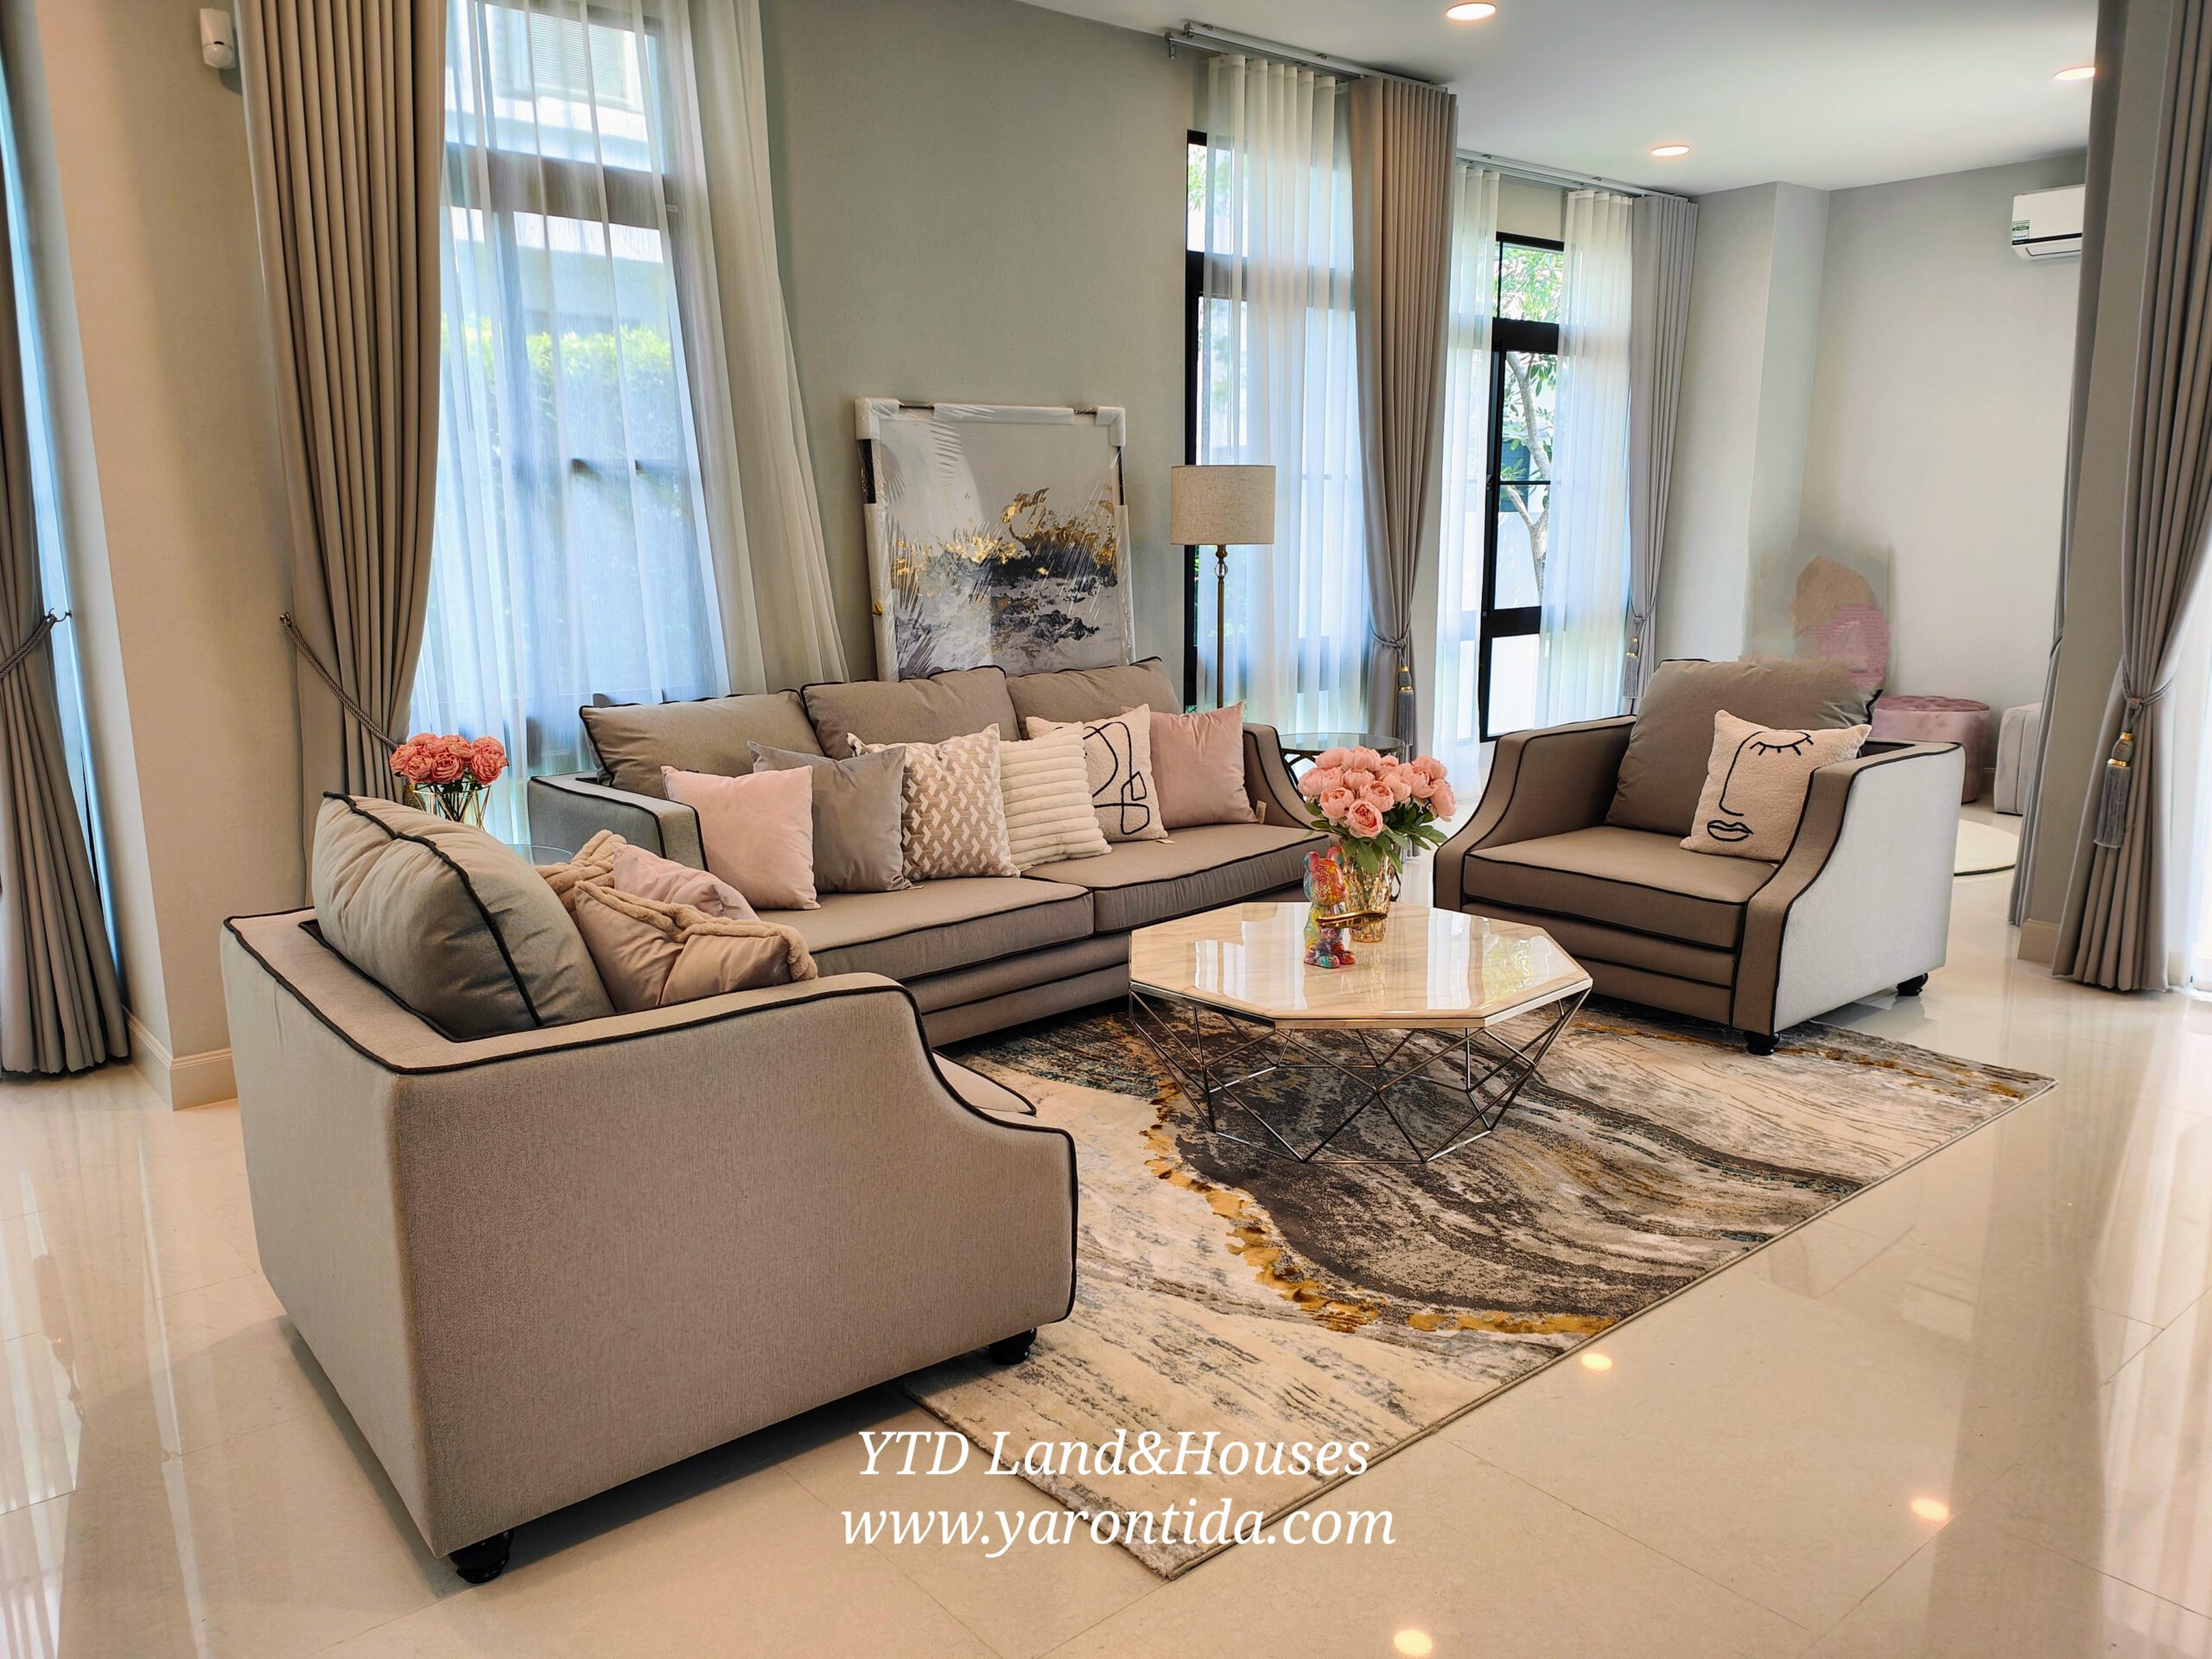 Luxury House for Rent Nantawan 2 Rama 9 Krungthepkreetha ให้เช่าบ้านหรู นันทวัน 2 พระราม 9 กรุงเทพกรีฑา THB 450k/month